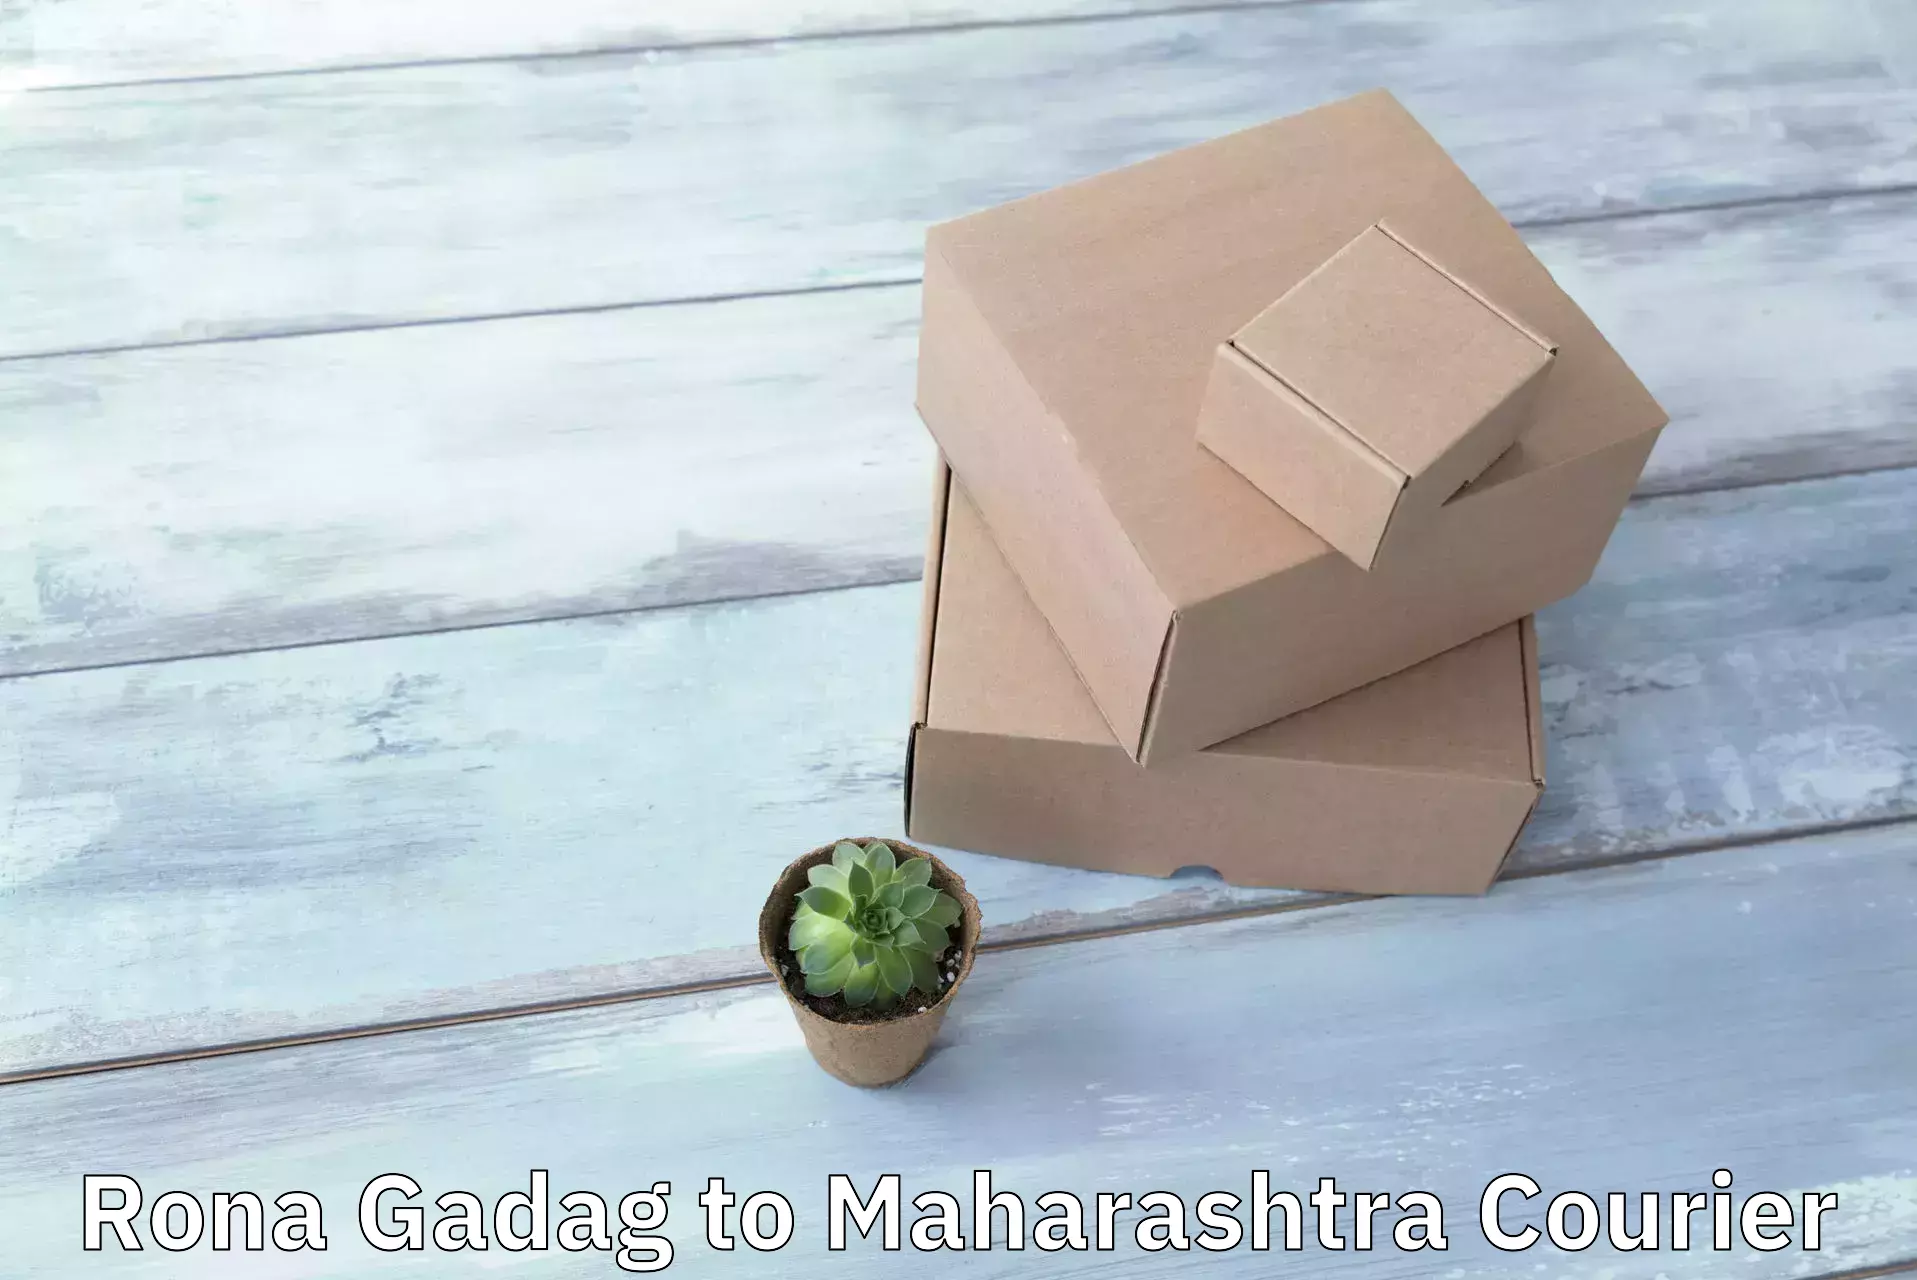 Next-day delivery options Rona Gadag to Maharashtra